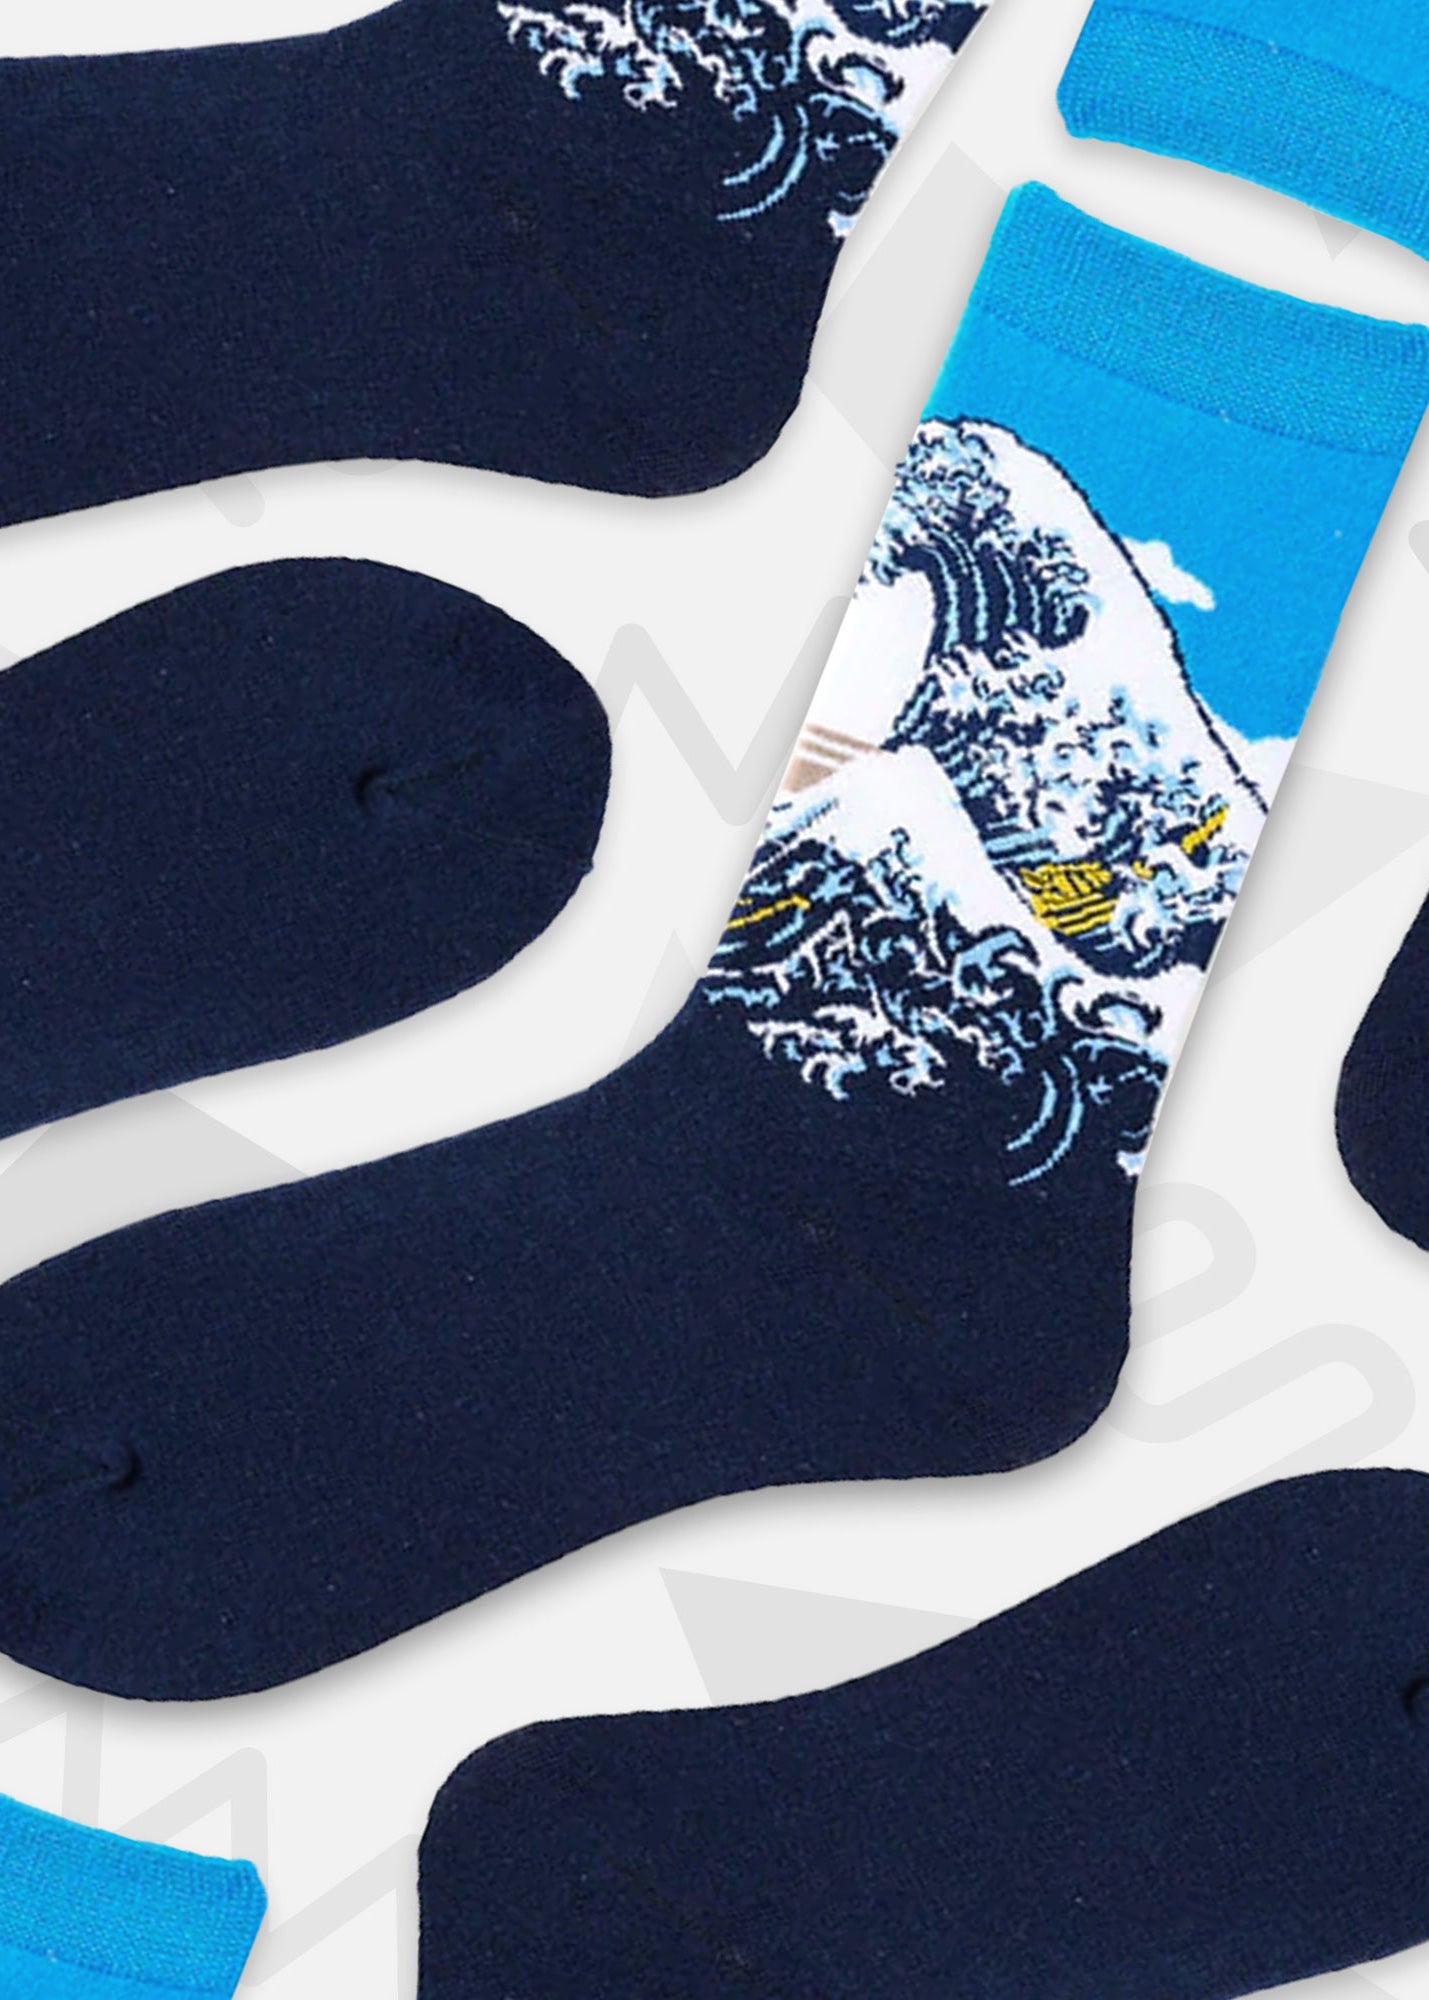 The Great Wave Off Kanagawa Printed Crew Length Socks - IDENTITY Apparel Shop